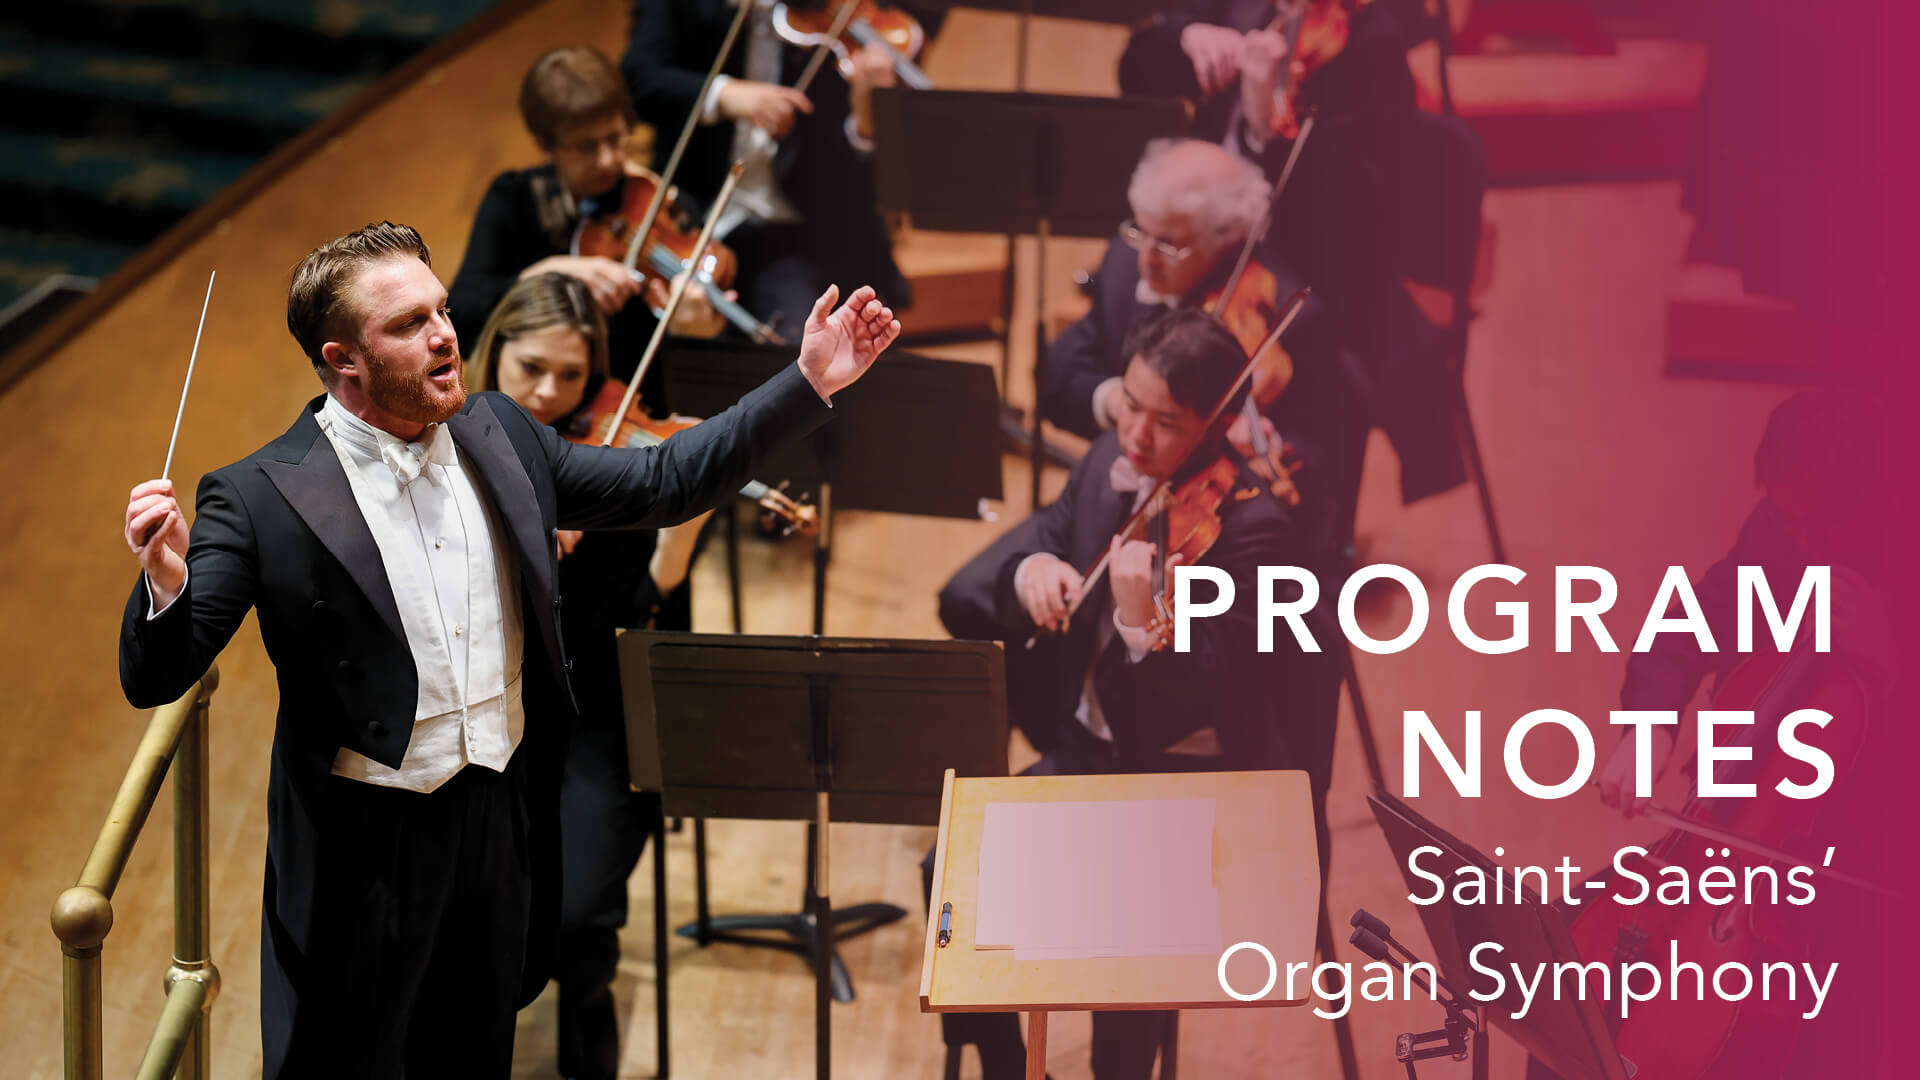 Featured image for “Program Notes: Saint-Saëns’ Organ Symphony”